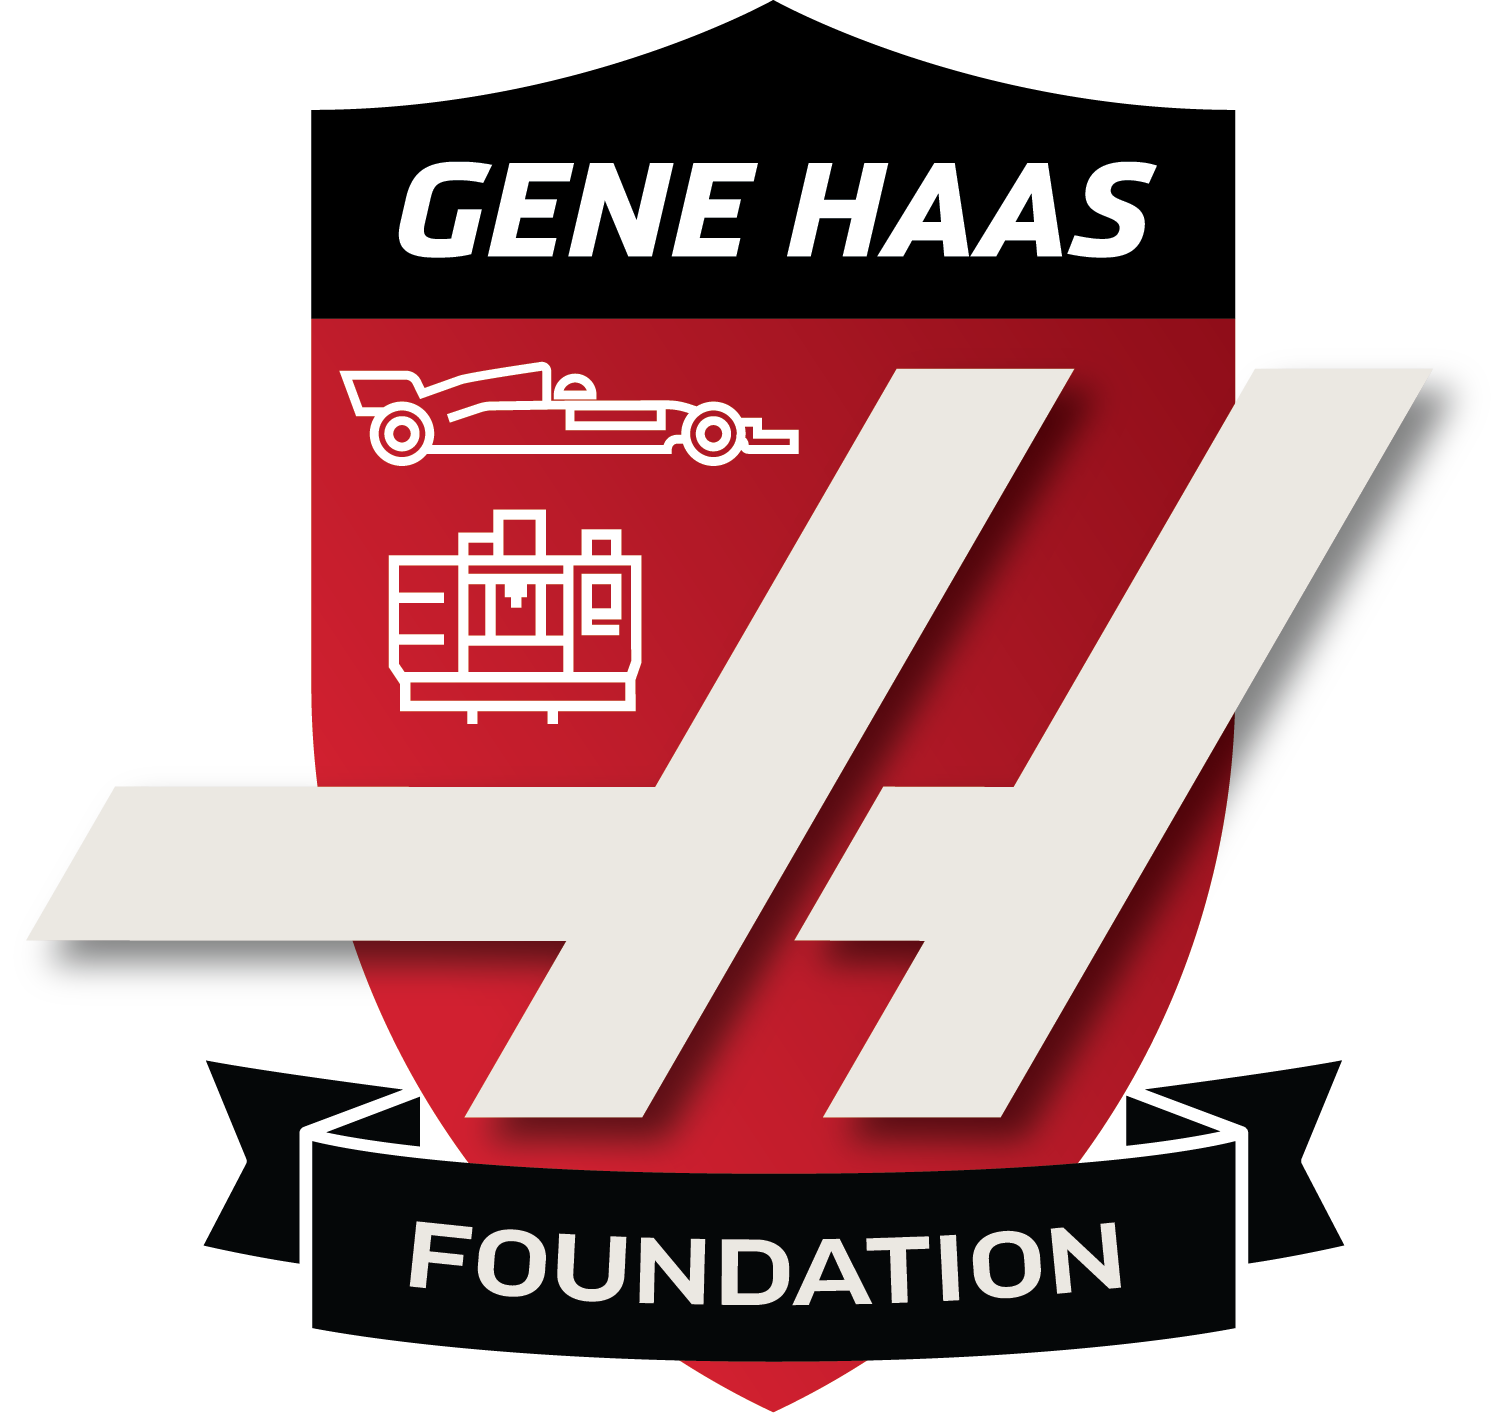 The Gene Haas Foundation